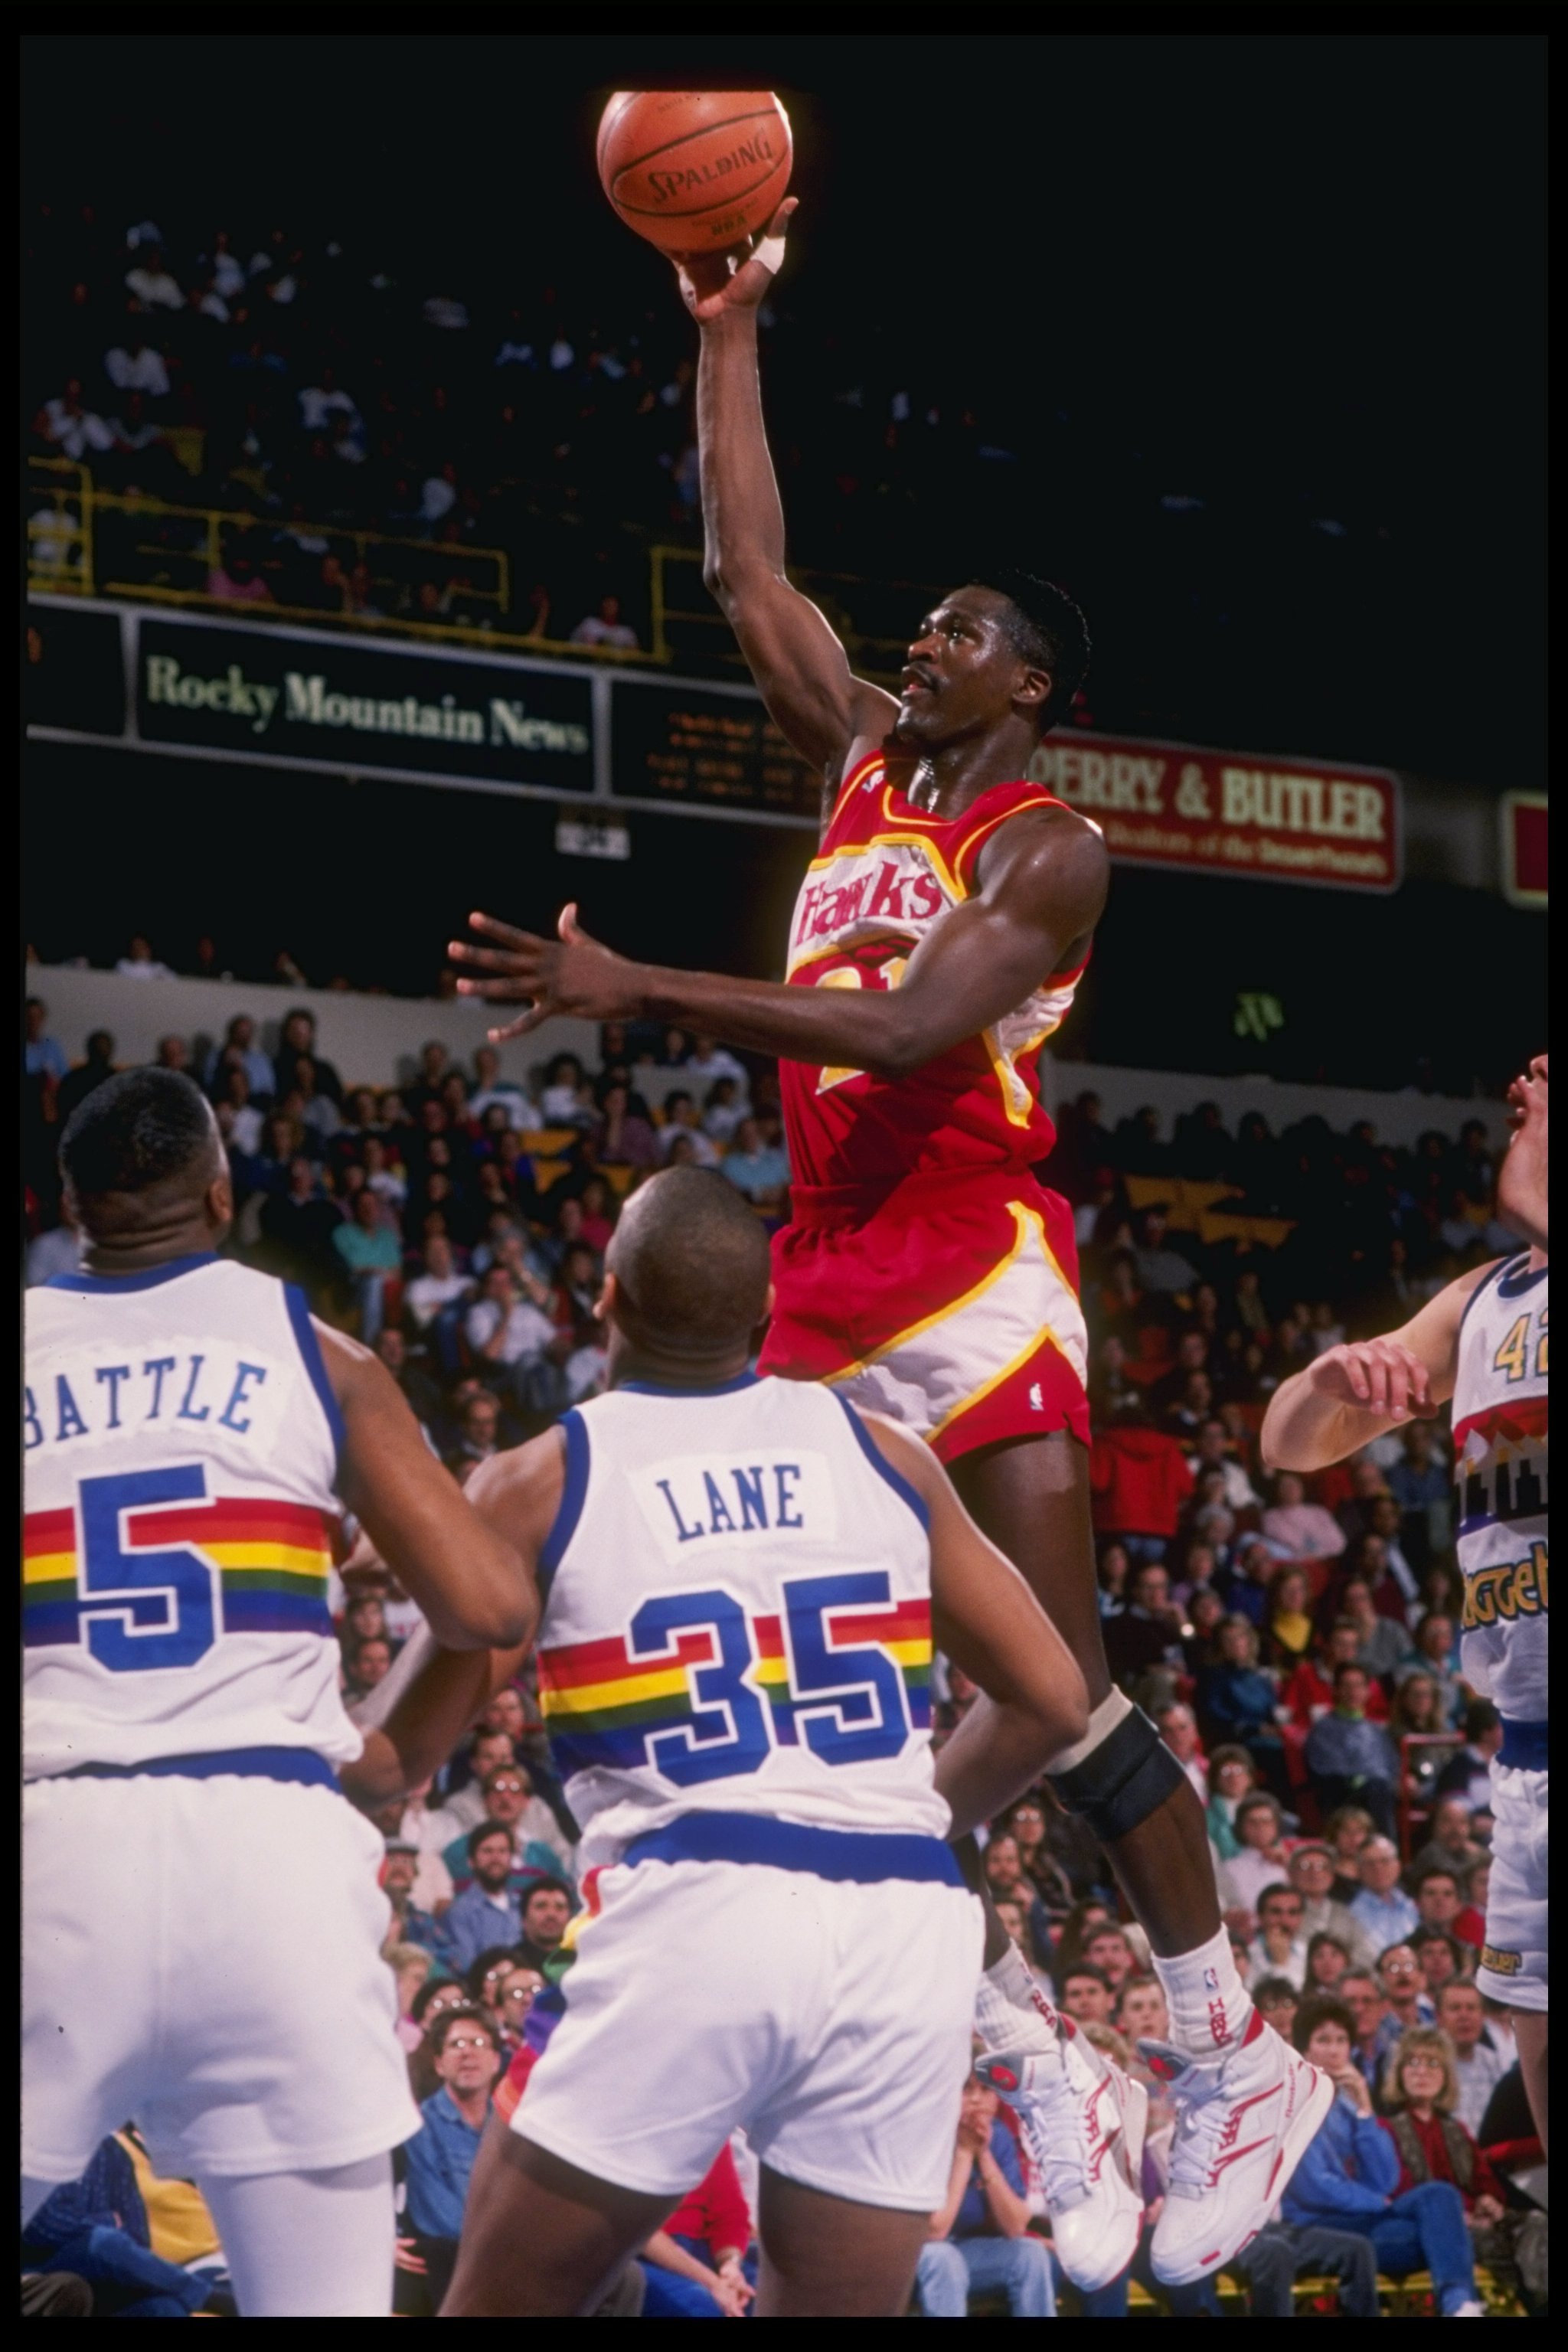 Michael Jordan Owns The NBA Vertical Jump: Where's Carter and Kobe